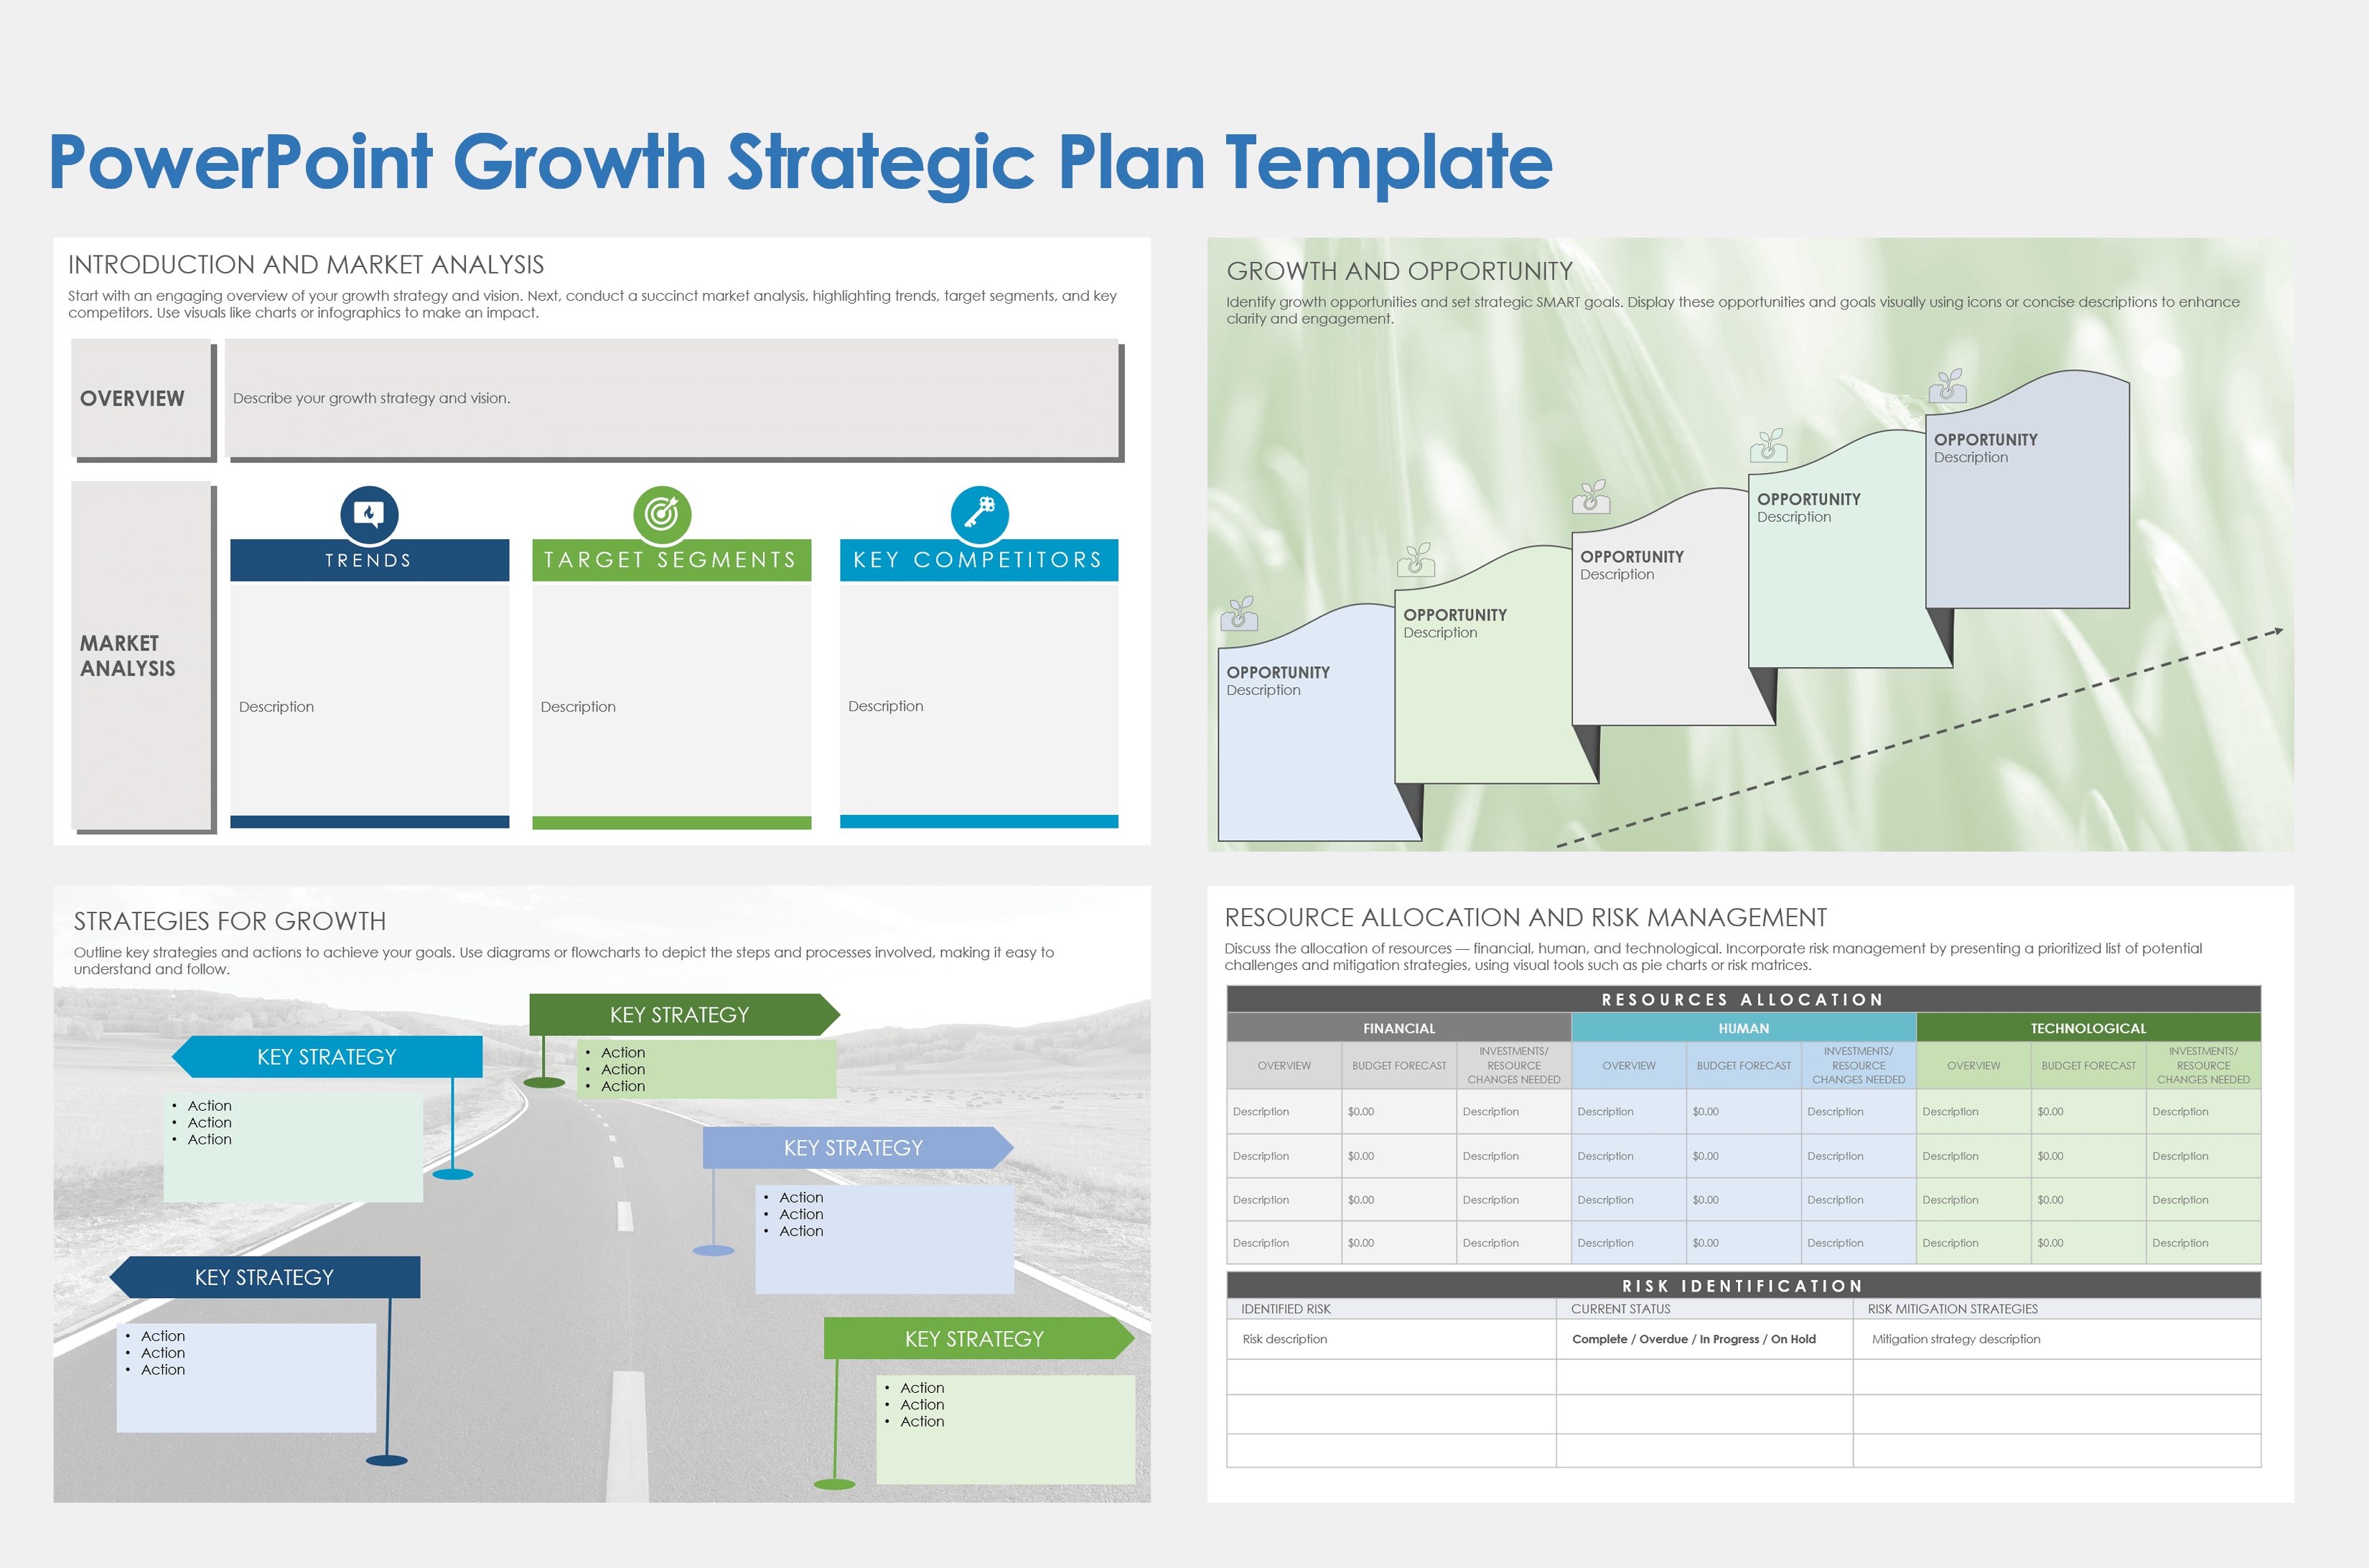 PowerPoint Growth Strategic Plan Template